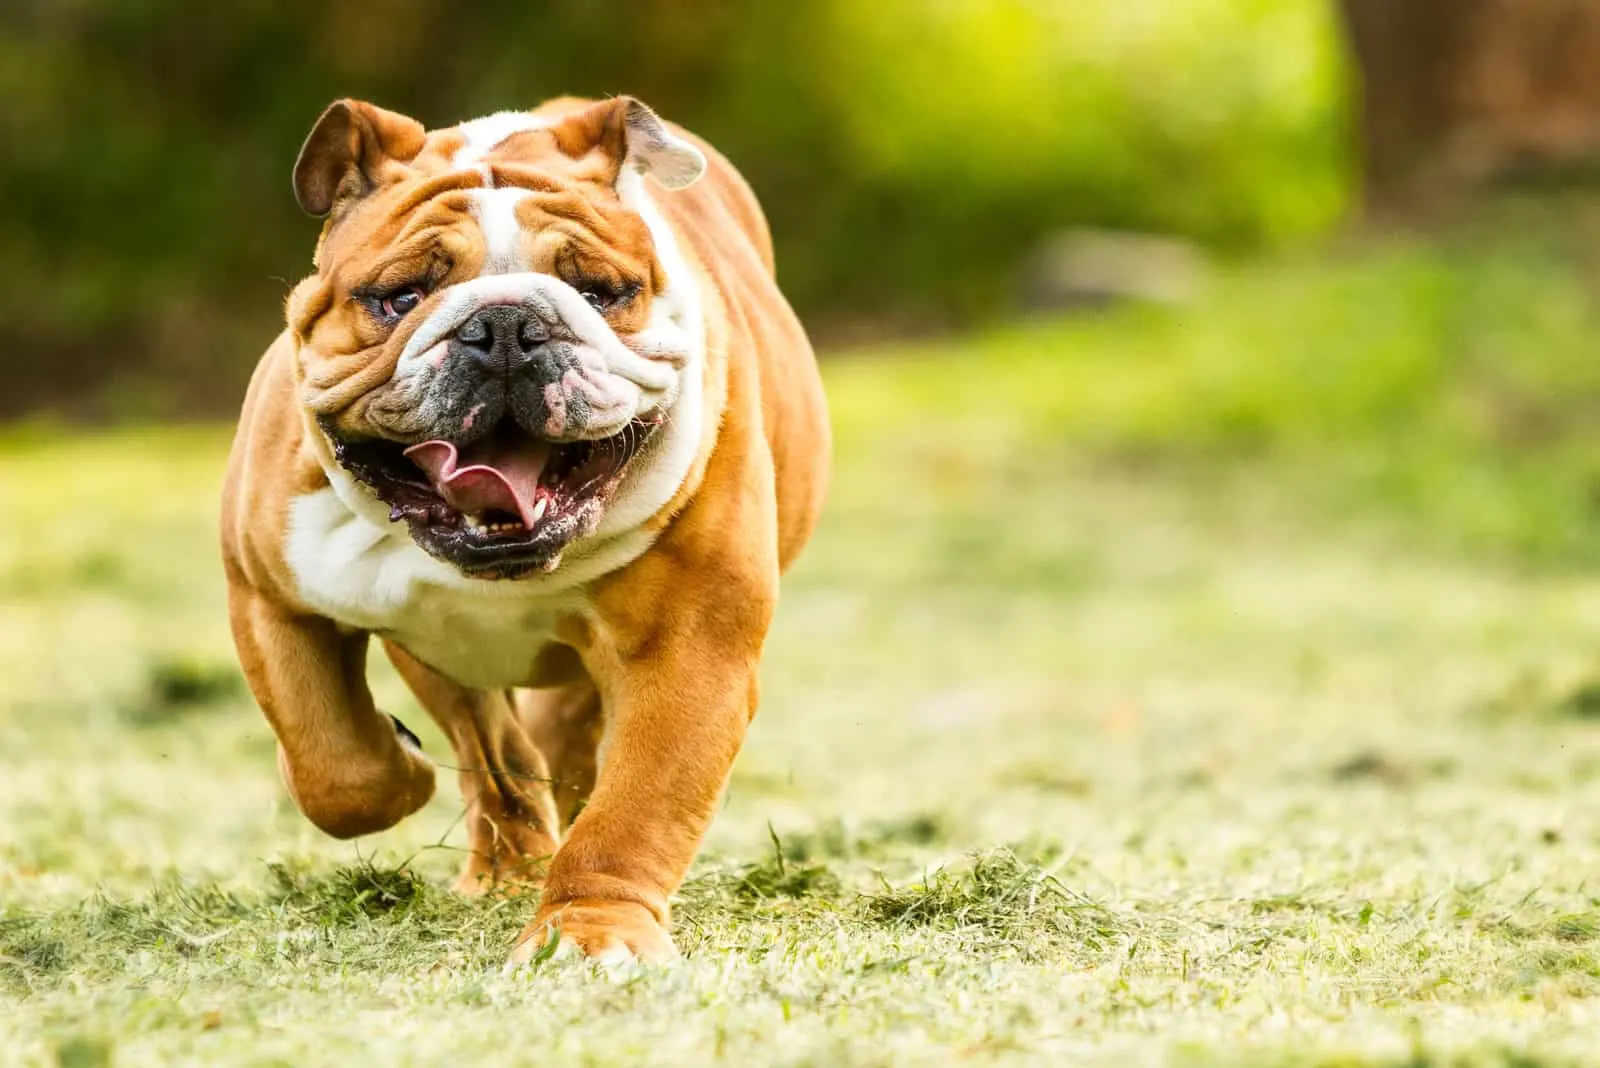 Bulldog runs across the field